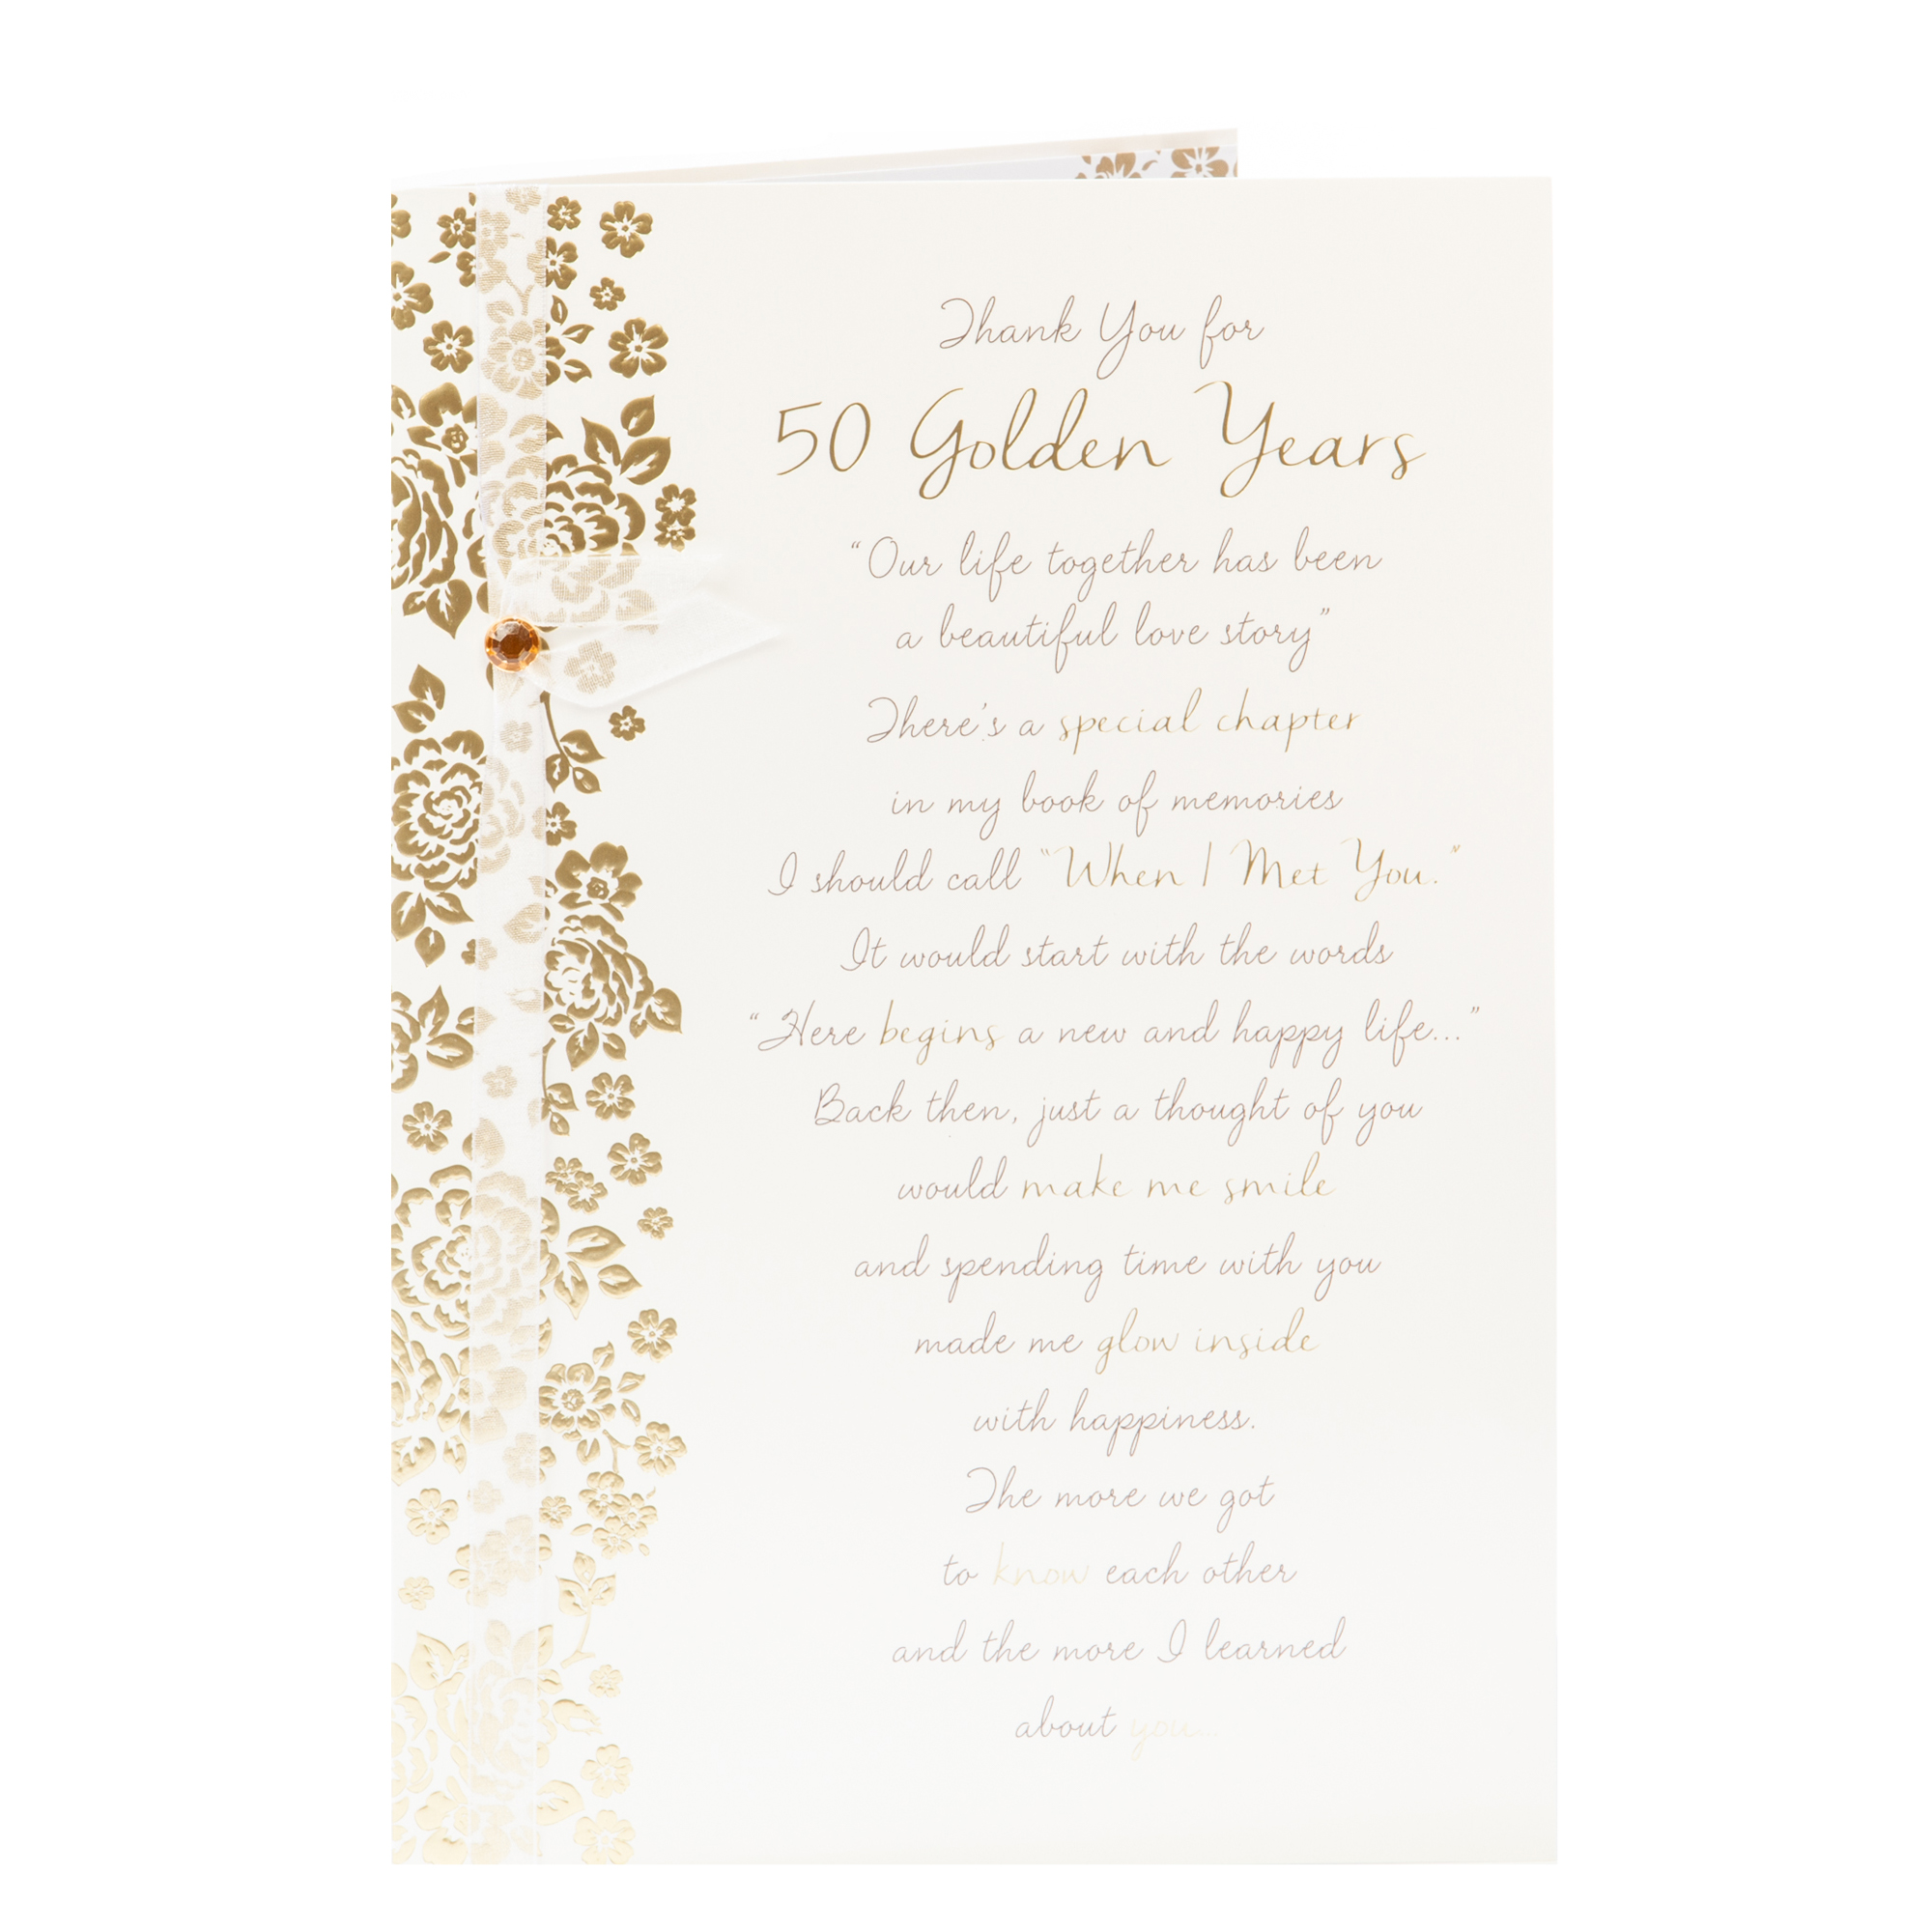 50th Wedding Anniversary Card - Golden Years 